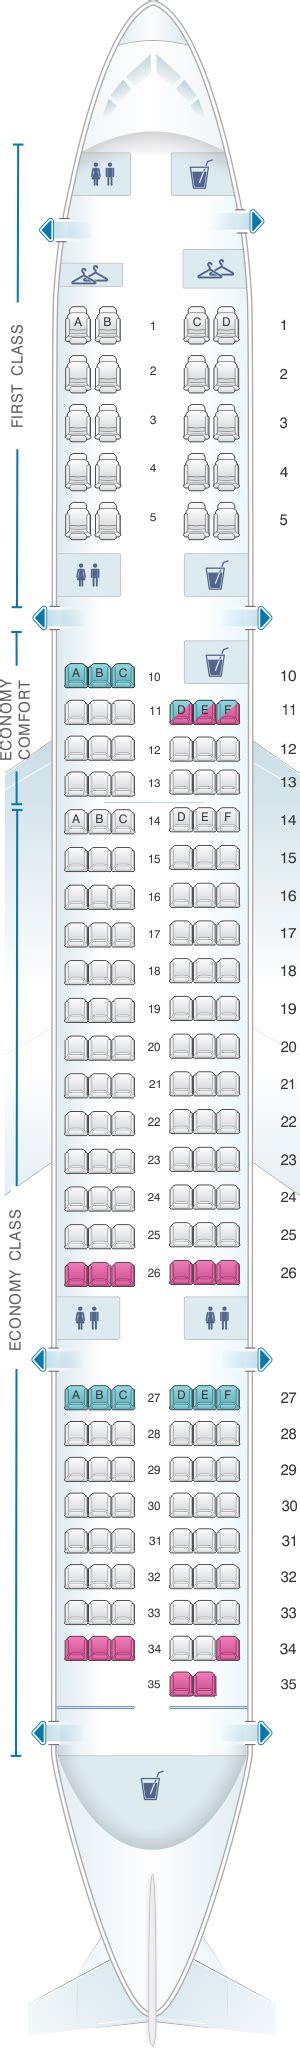 Seatguru Seat Map Delta Boeing 757 200 75775u Seating Charts Images